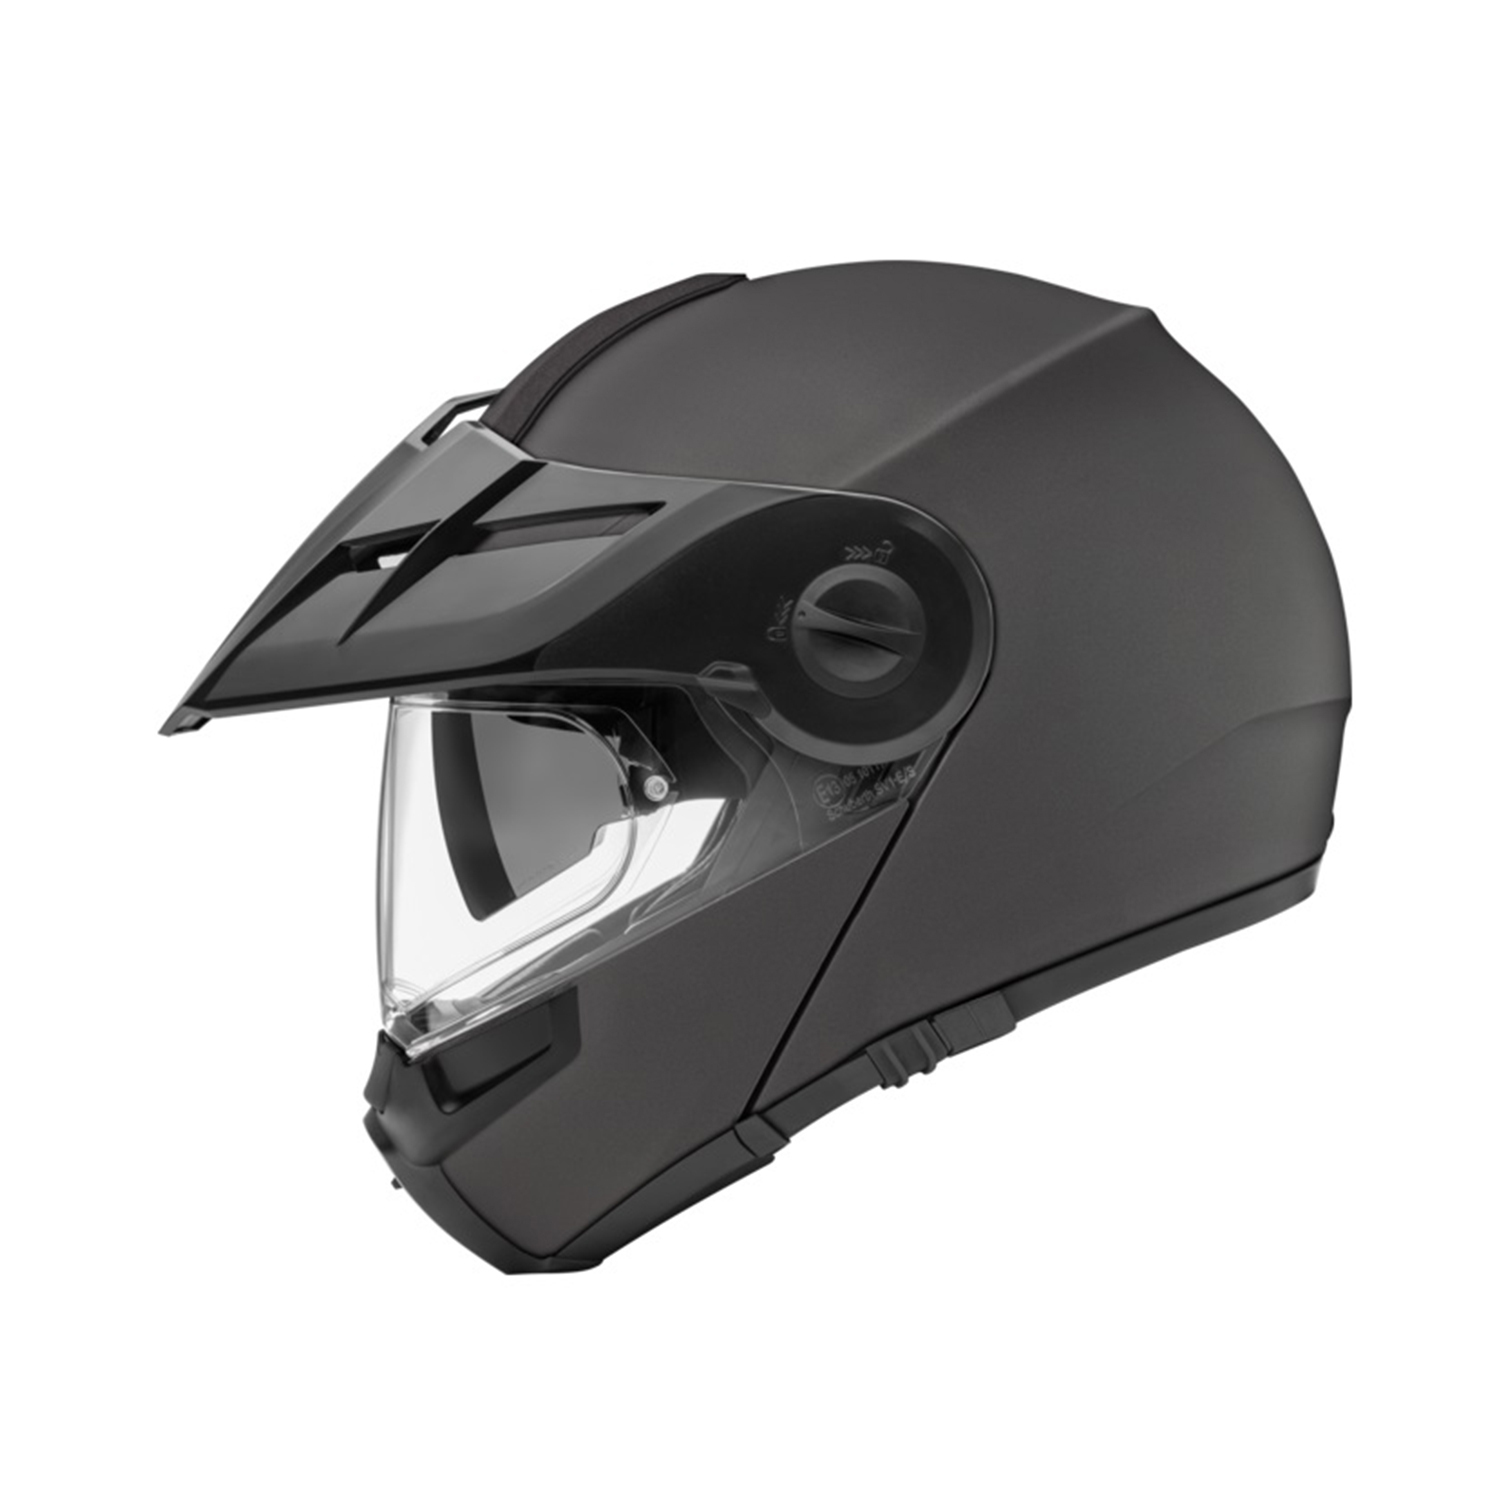 Schuberth E1 Adventure Helmet Matt Anthracite - Available in Various Sizes